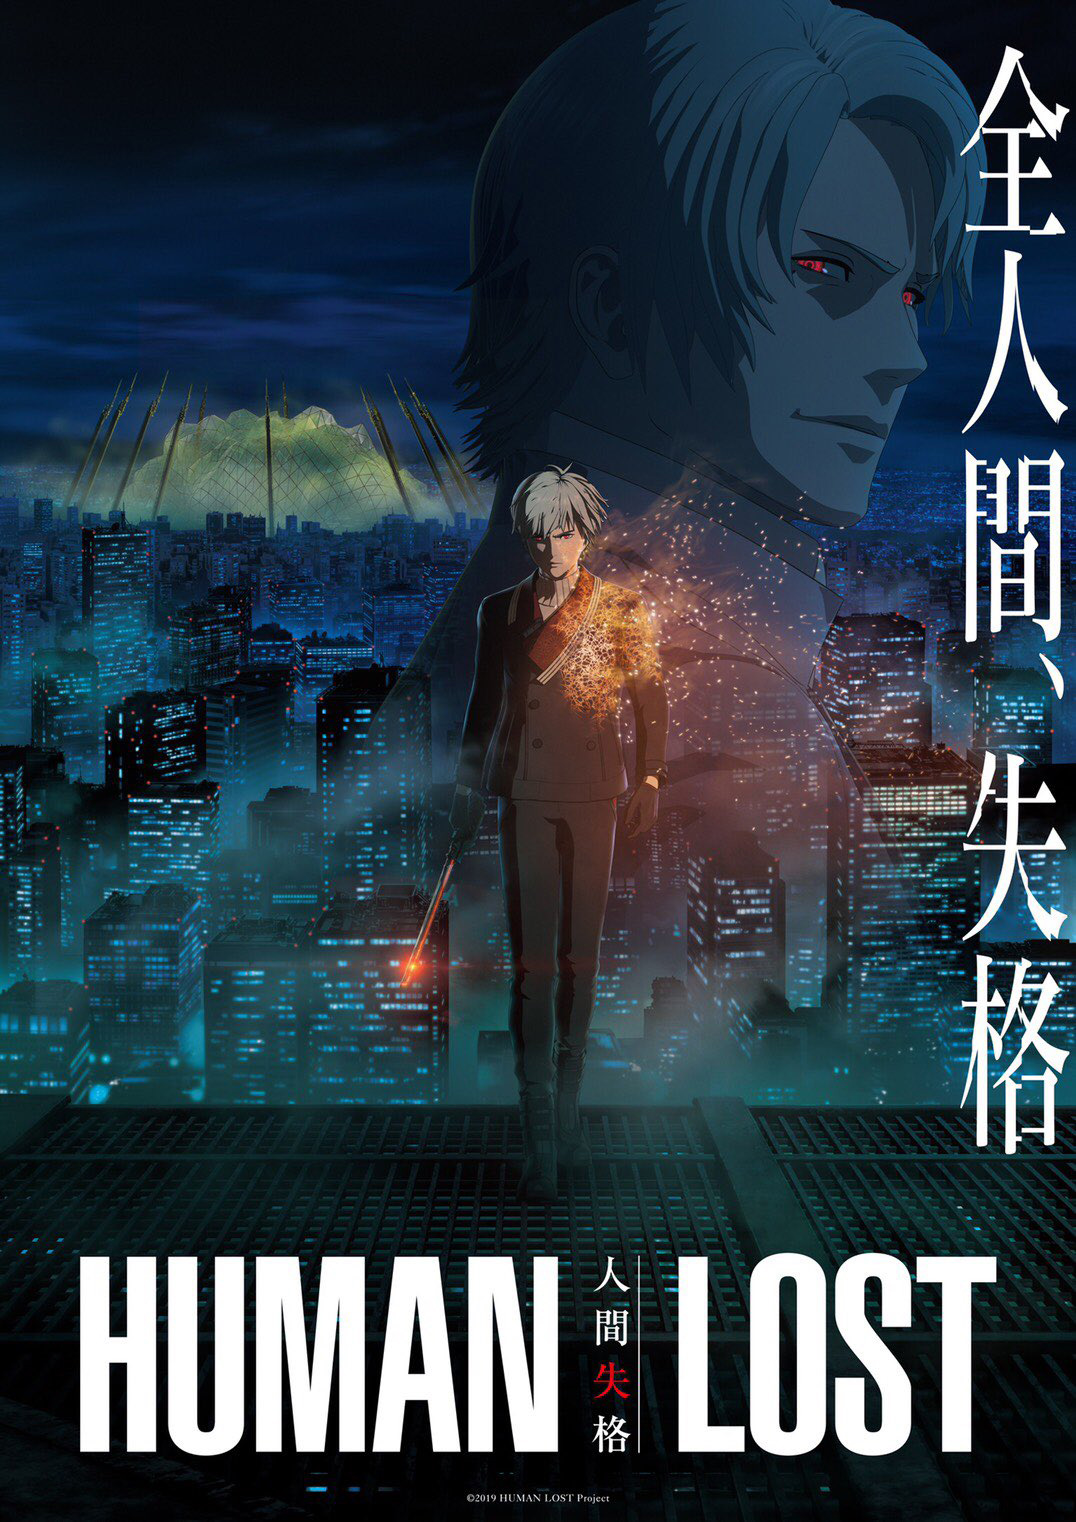 Human Lost, imagem promocional